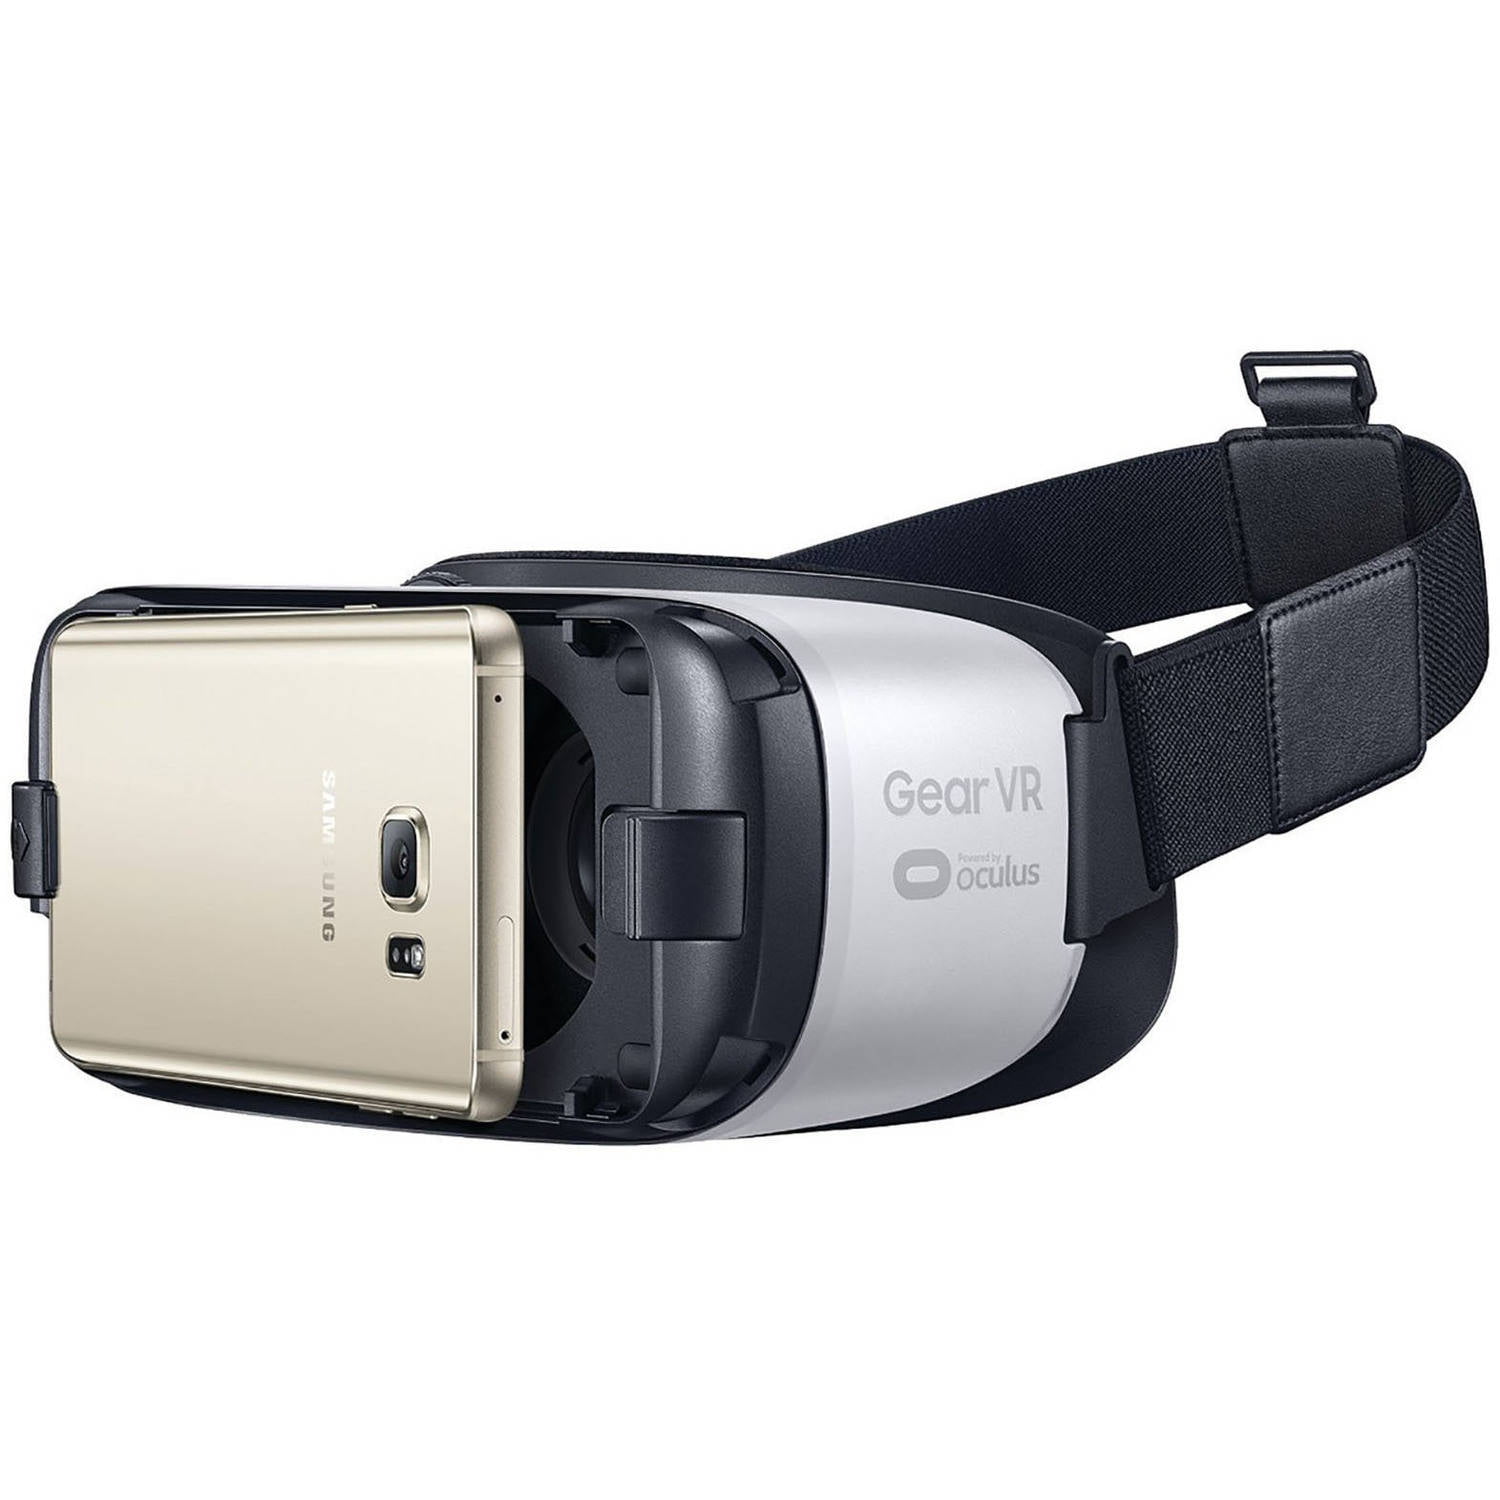 Underlegen helikopter forlade Samsung Gear VR R233 Powered by Oculus - Walmart.com